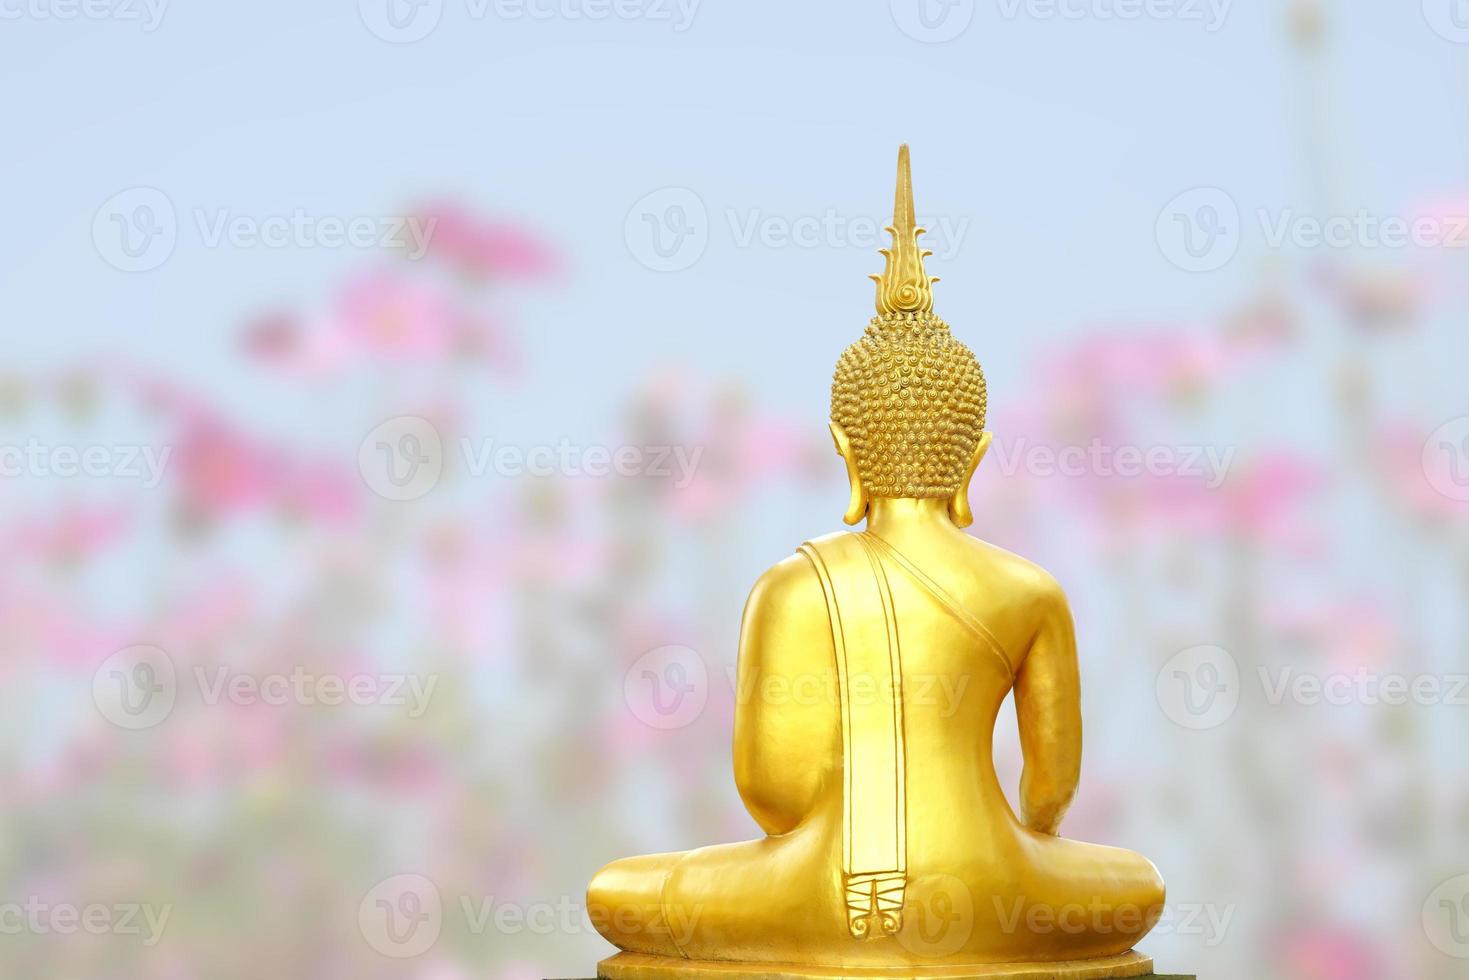 makha asanaha visakha bucha dag gouden Boeddha beeld. achtergrond van bodhi bladeren met glanzend licht. zacht beeld en vloeiende focusstijl foto